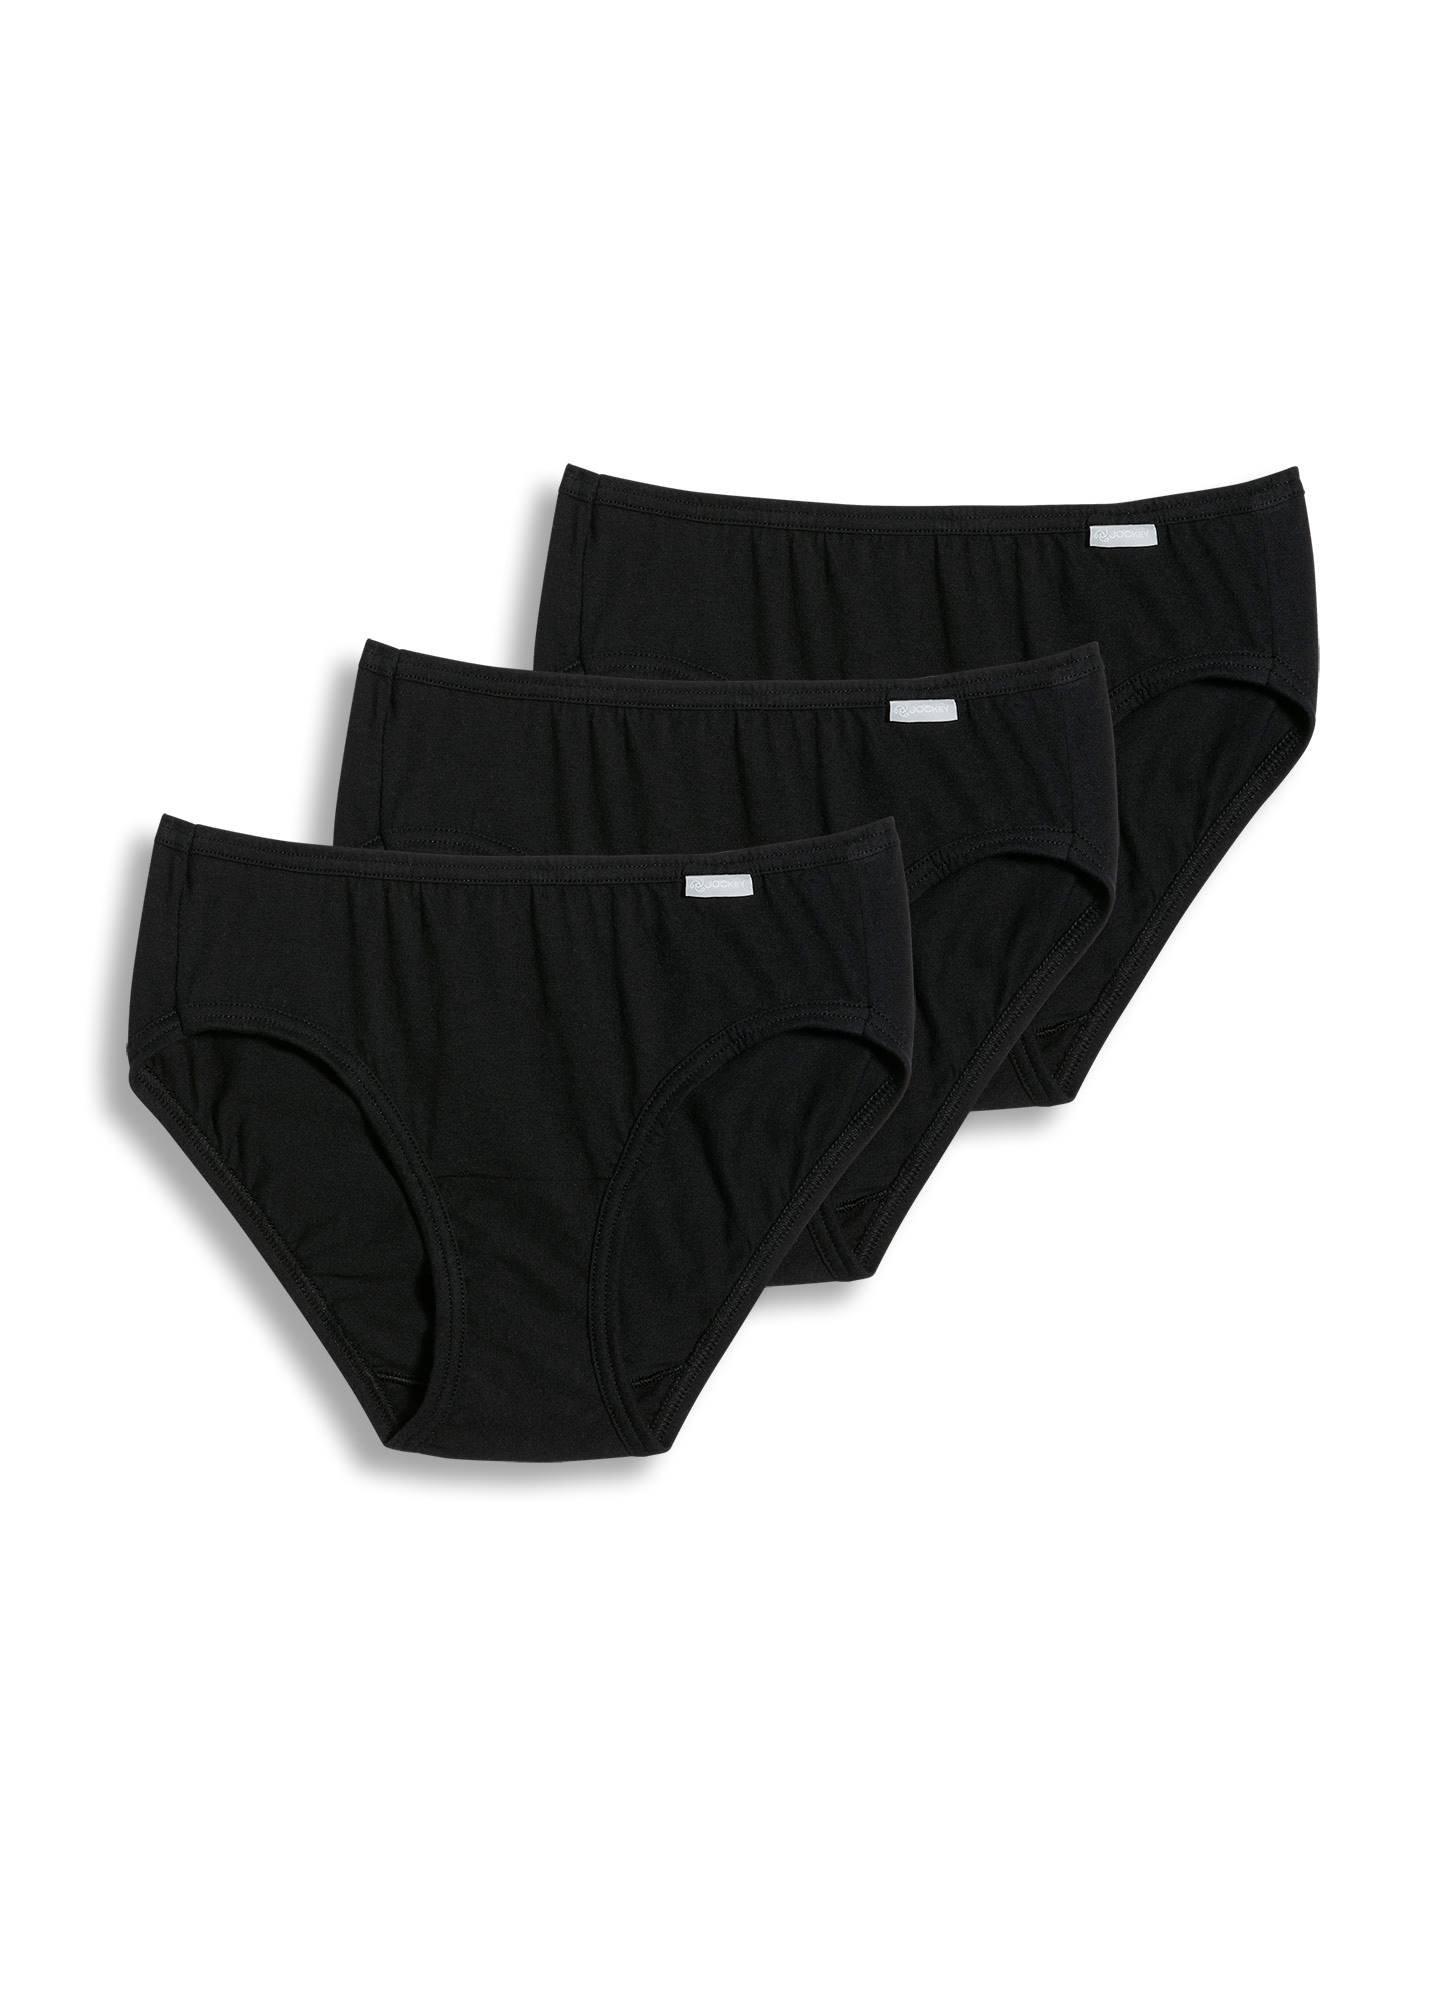 Jockey Women's Underwear Elance Bikini - 3 Pack, Black, 6